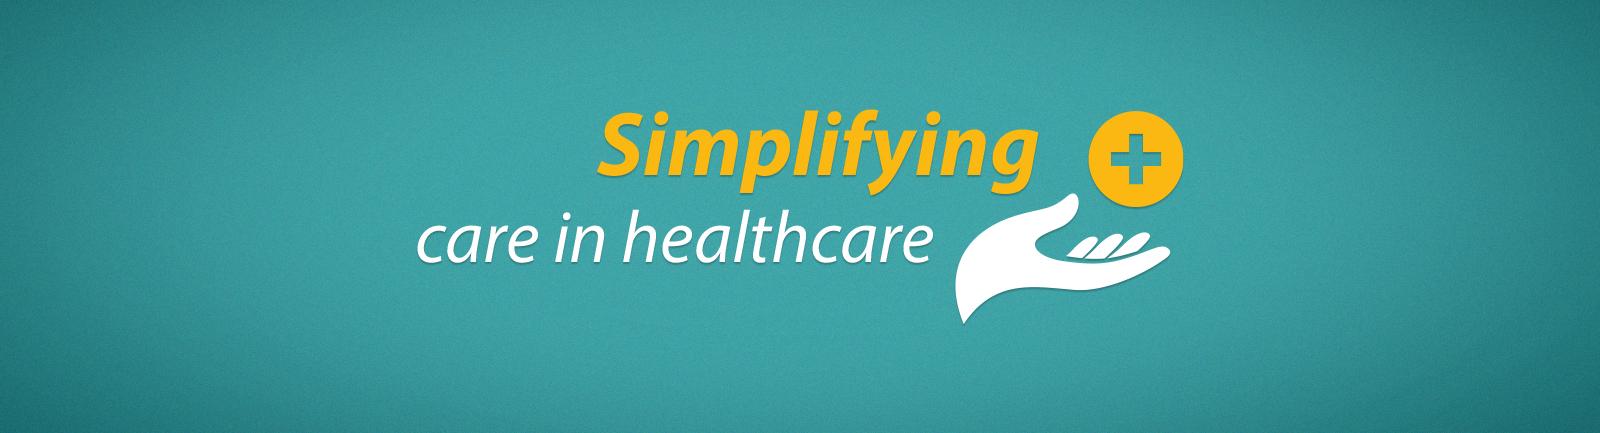 Simplifying Care